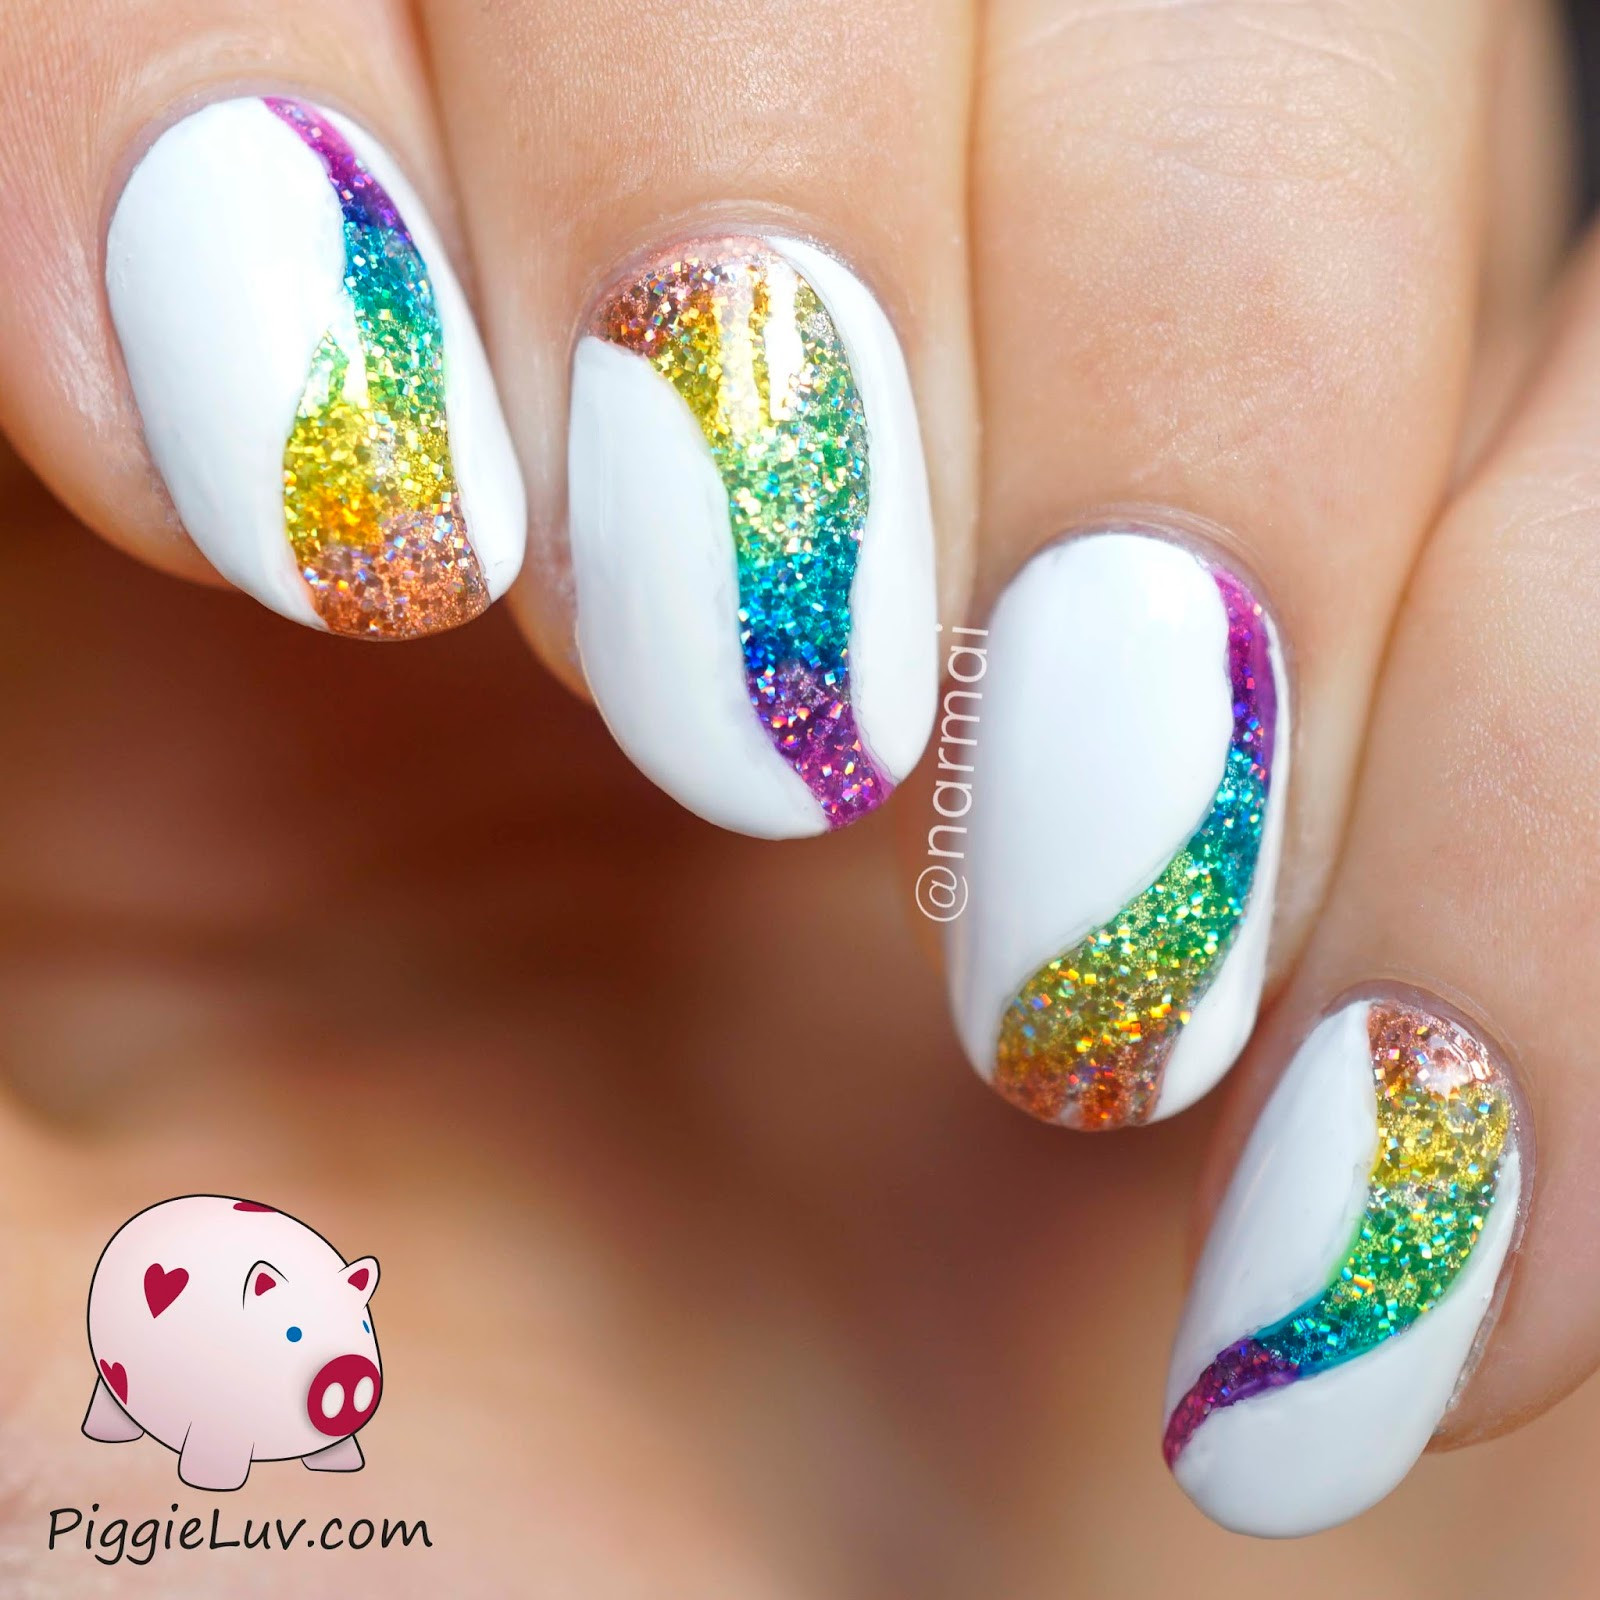 Different Color Nail Designs
 PiggieLuv My favorite nail art designs of 2015